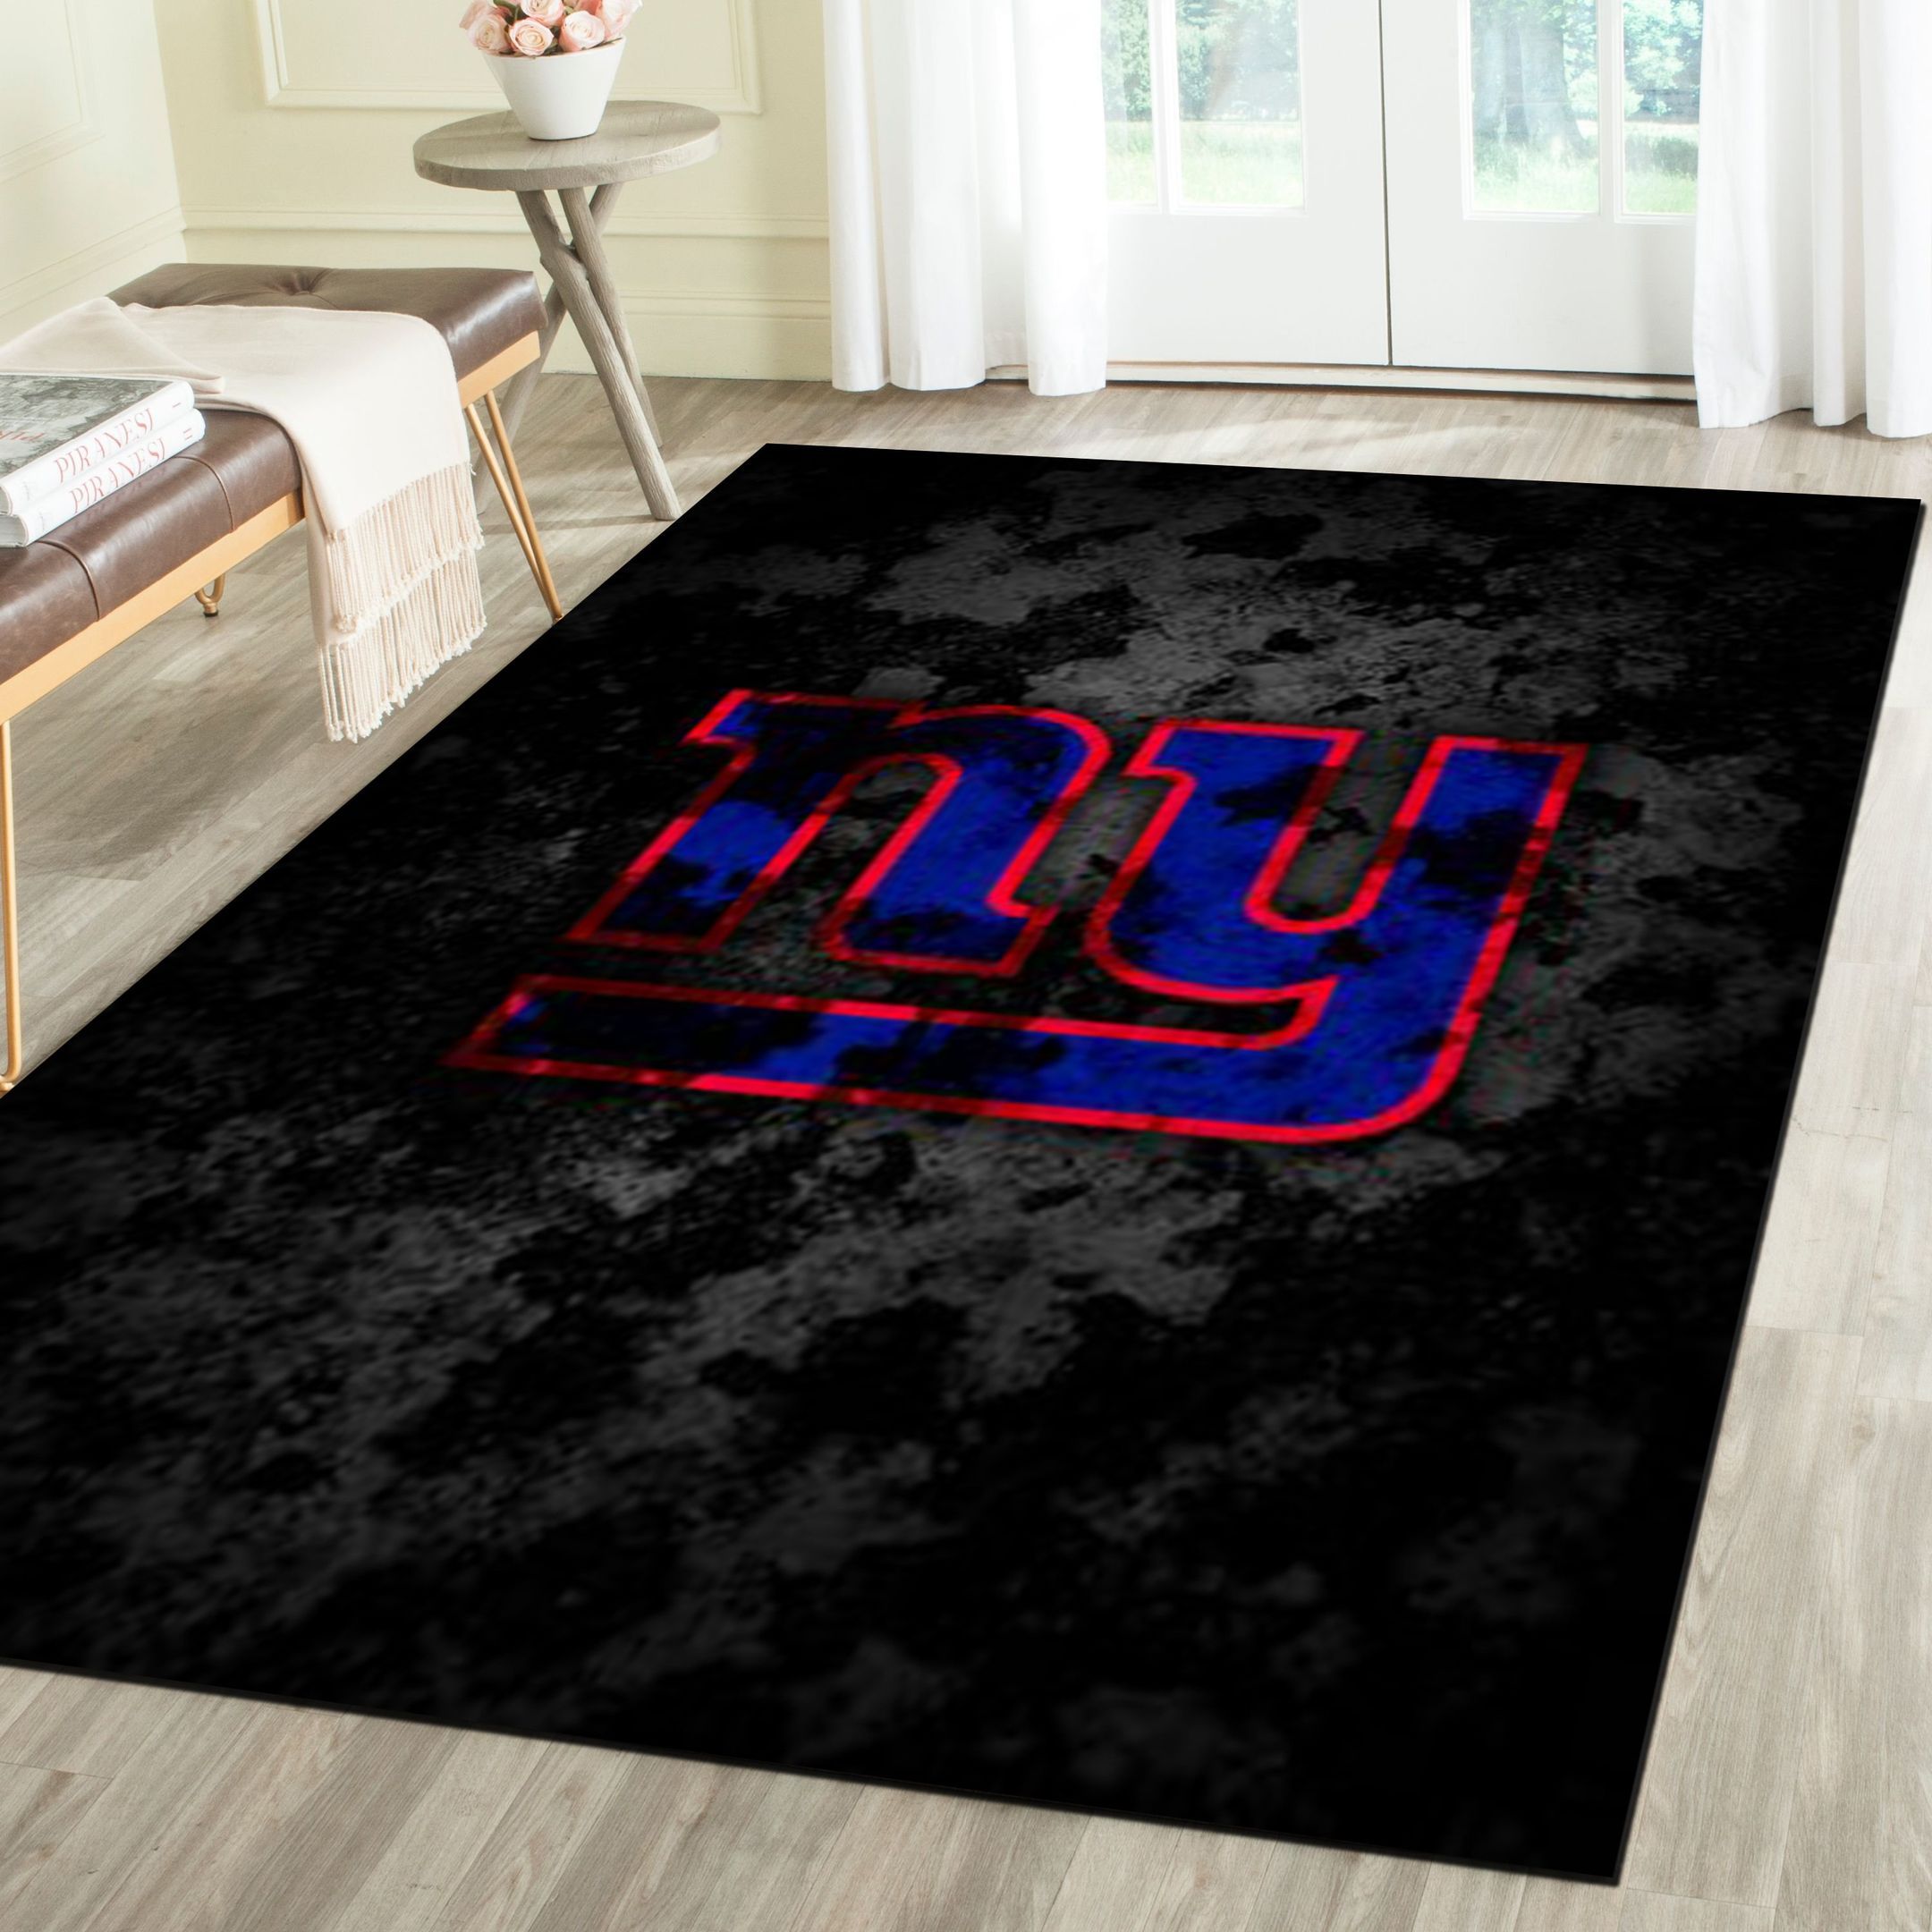 New York Giants Logo Area Rug, Football Team Living Room Bedroom Carpet, Sports Floor Decor